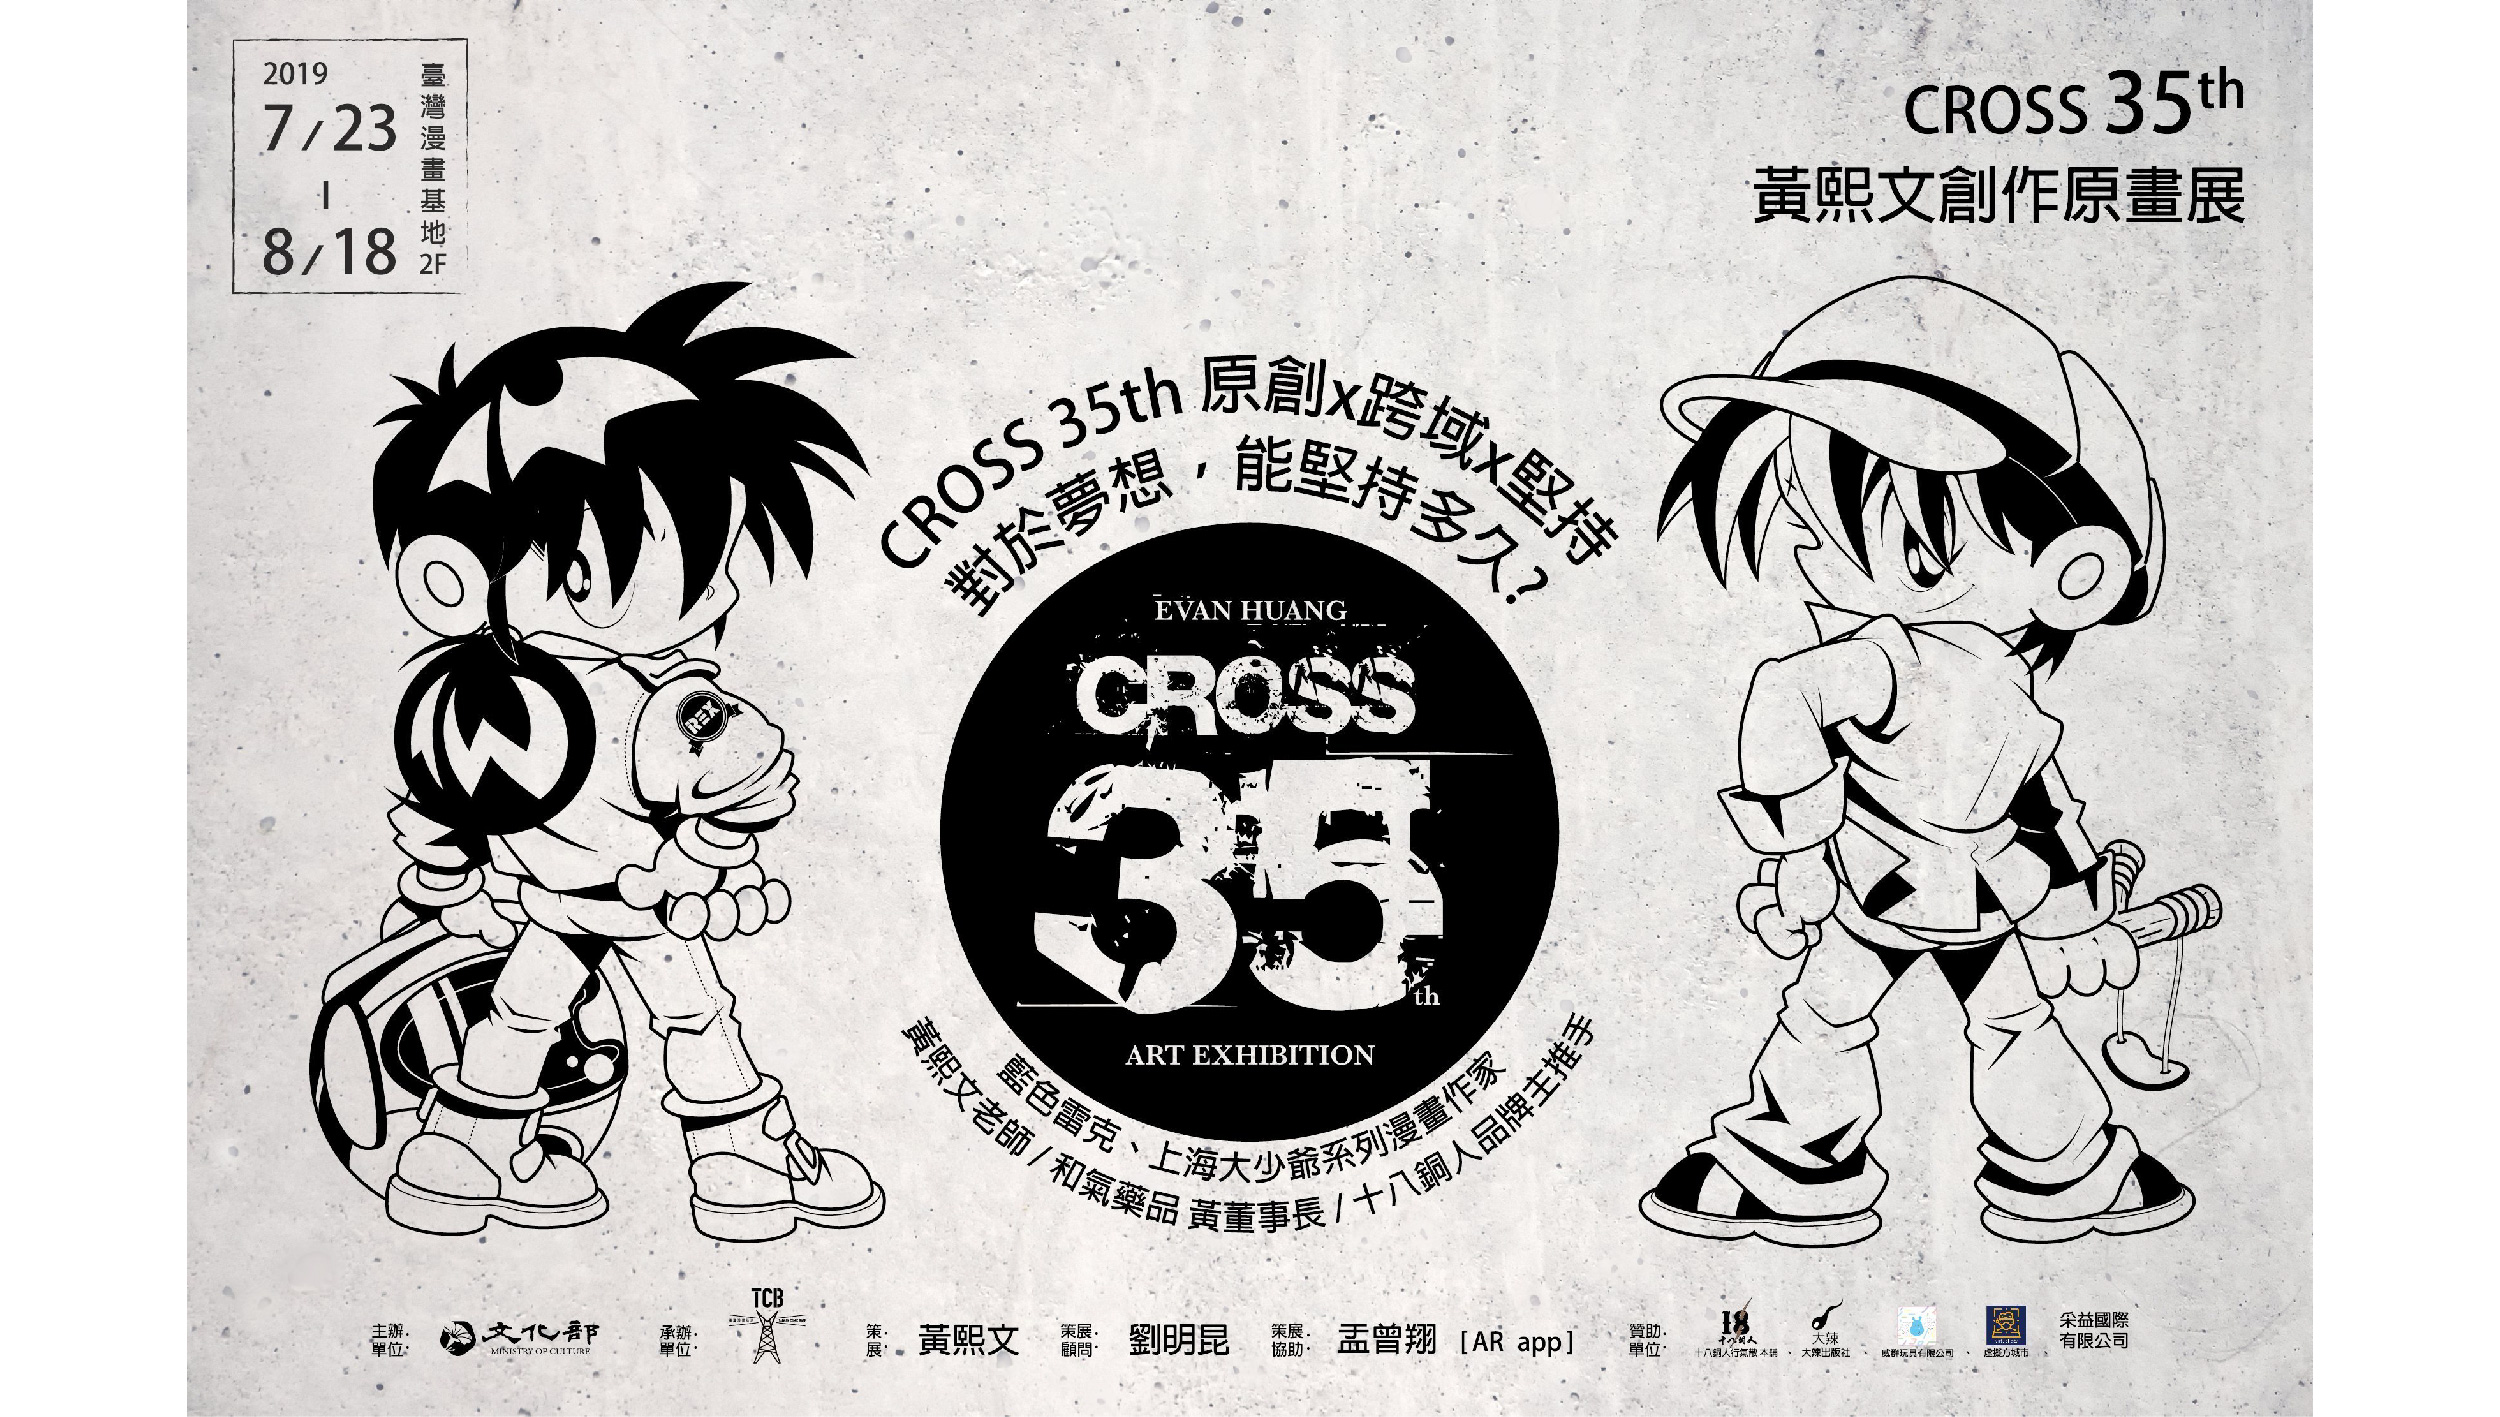 Cross 35th——2019年黃熙文創作原畫展